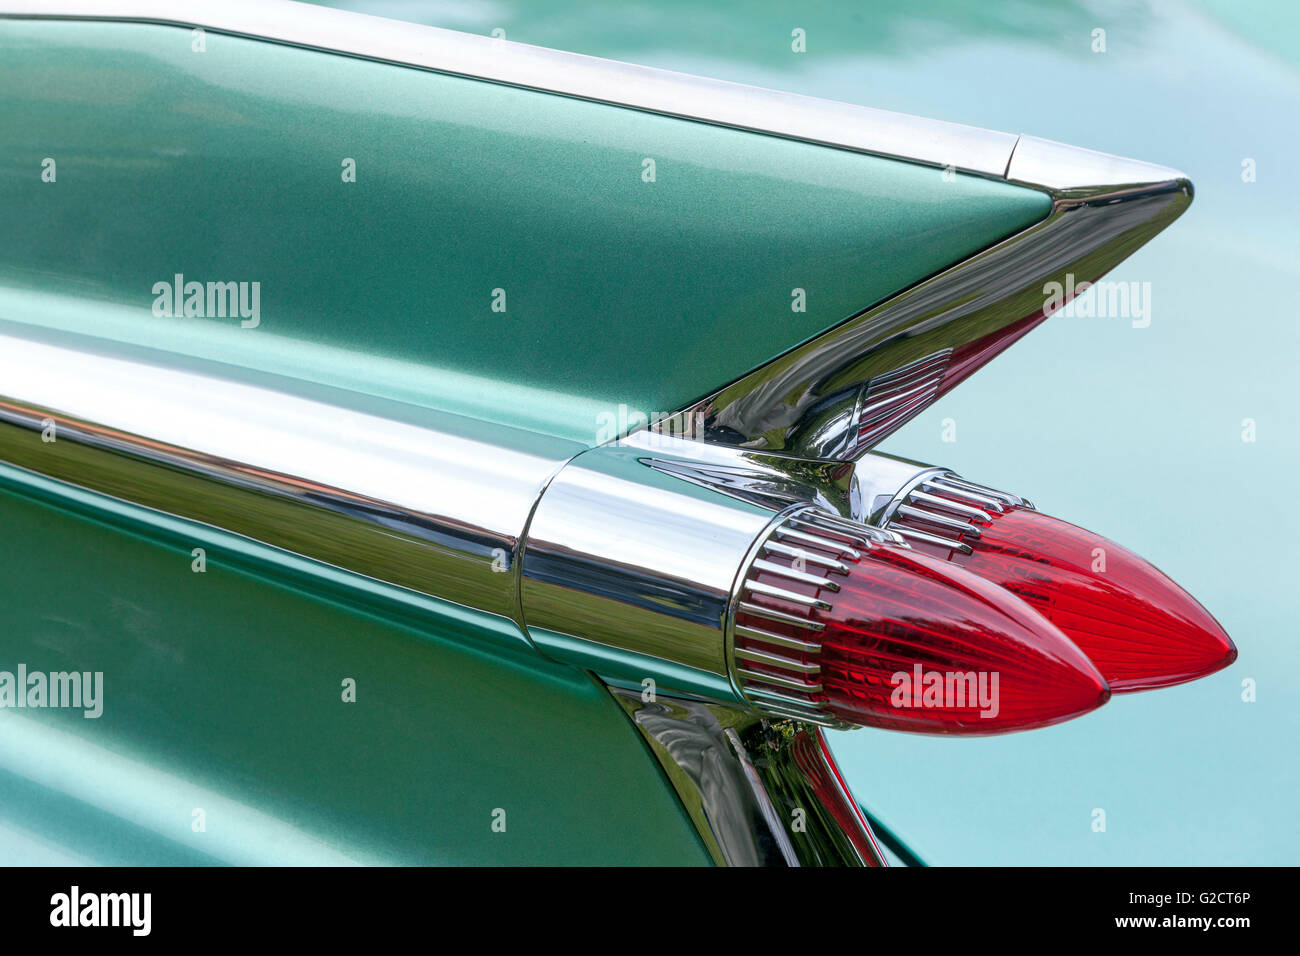 Cadillac Fleetwood 1959, American classic car vintage tail light Cadillac close up Stock Photo